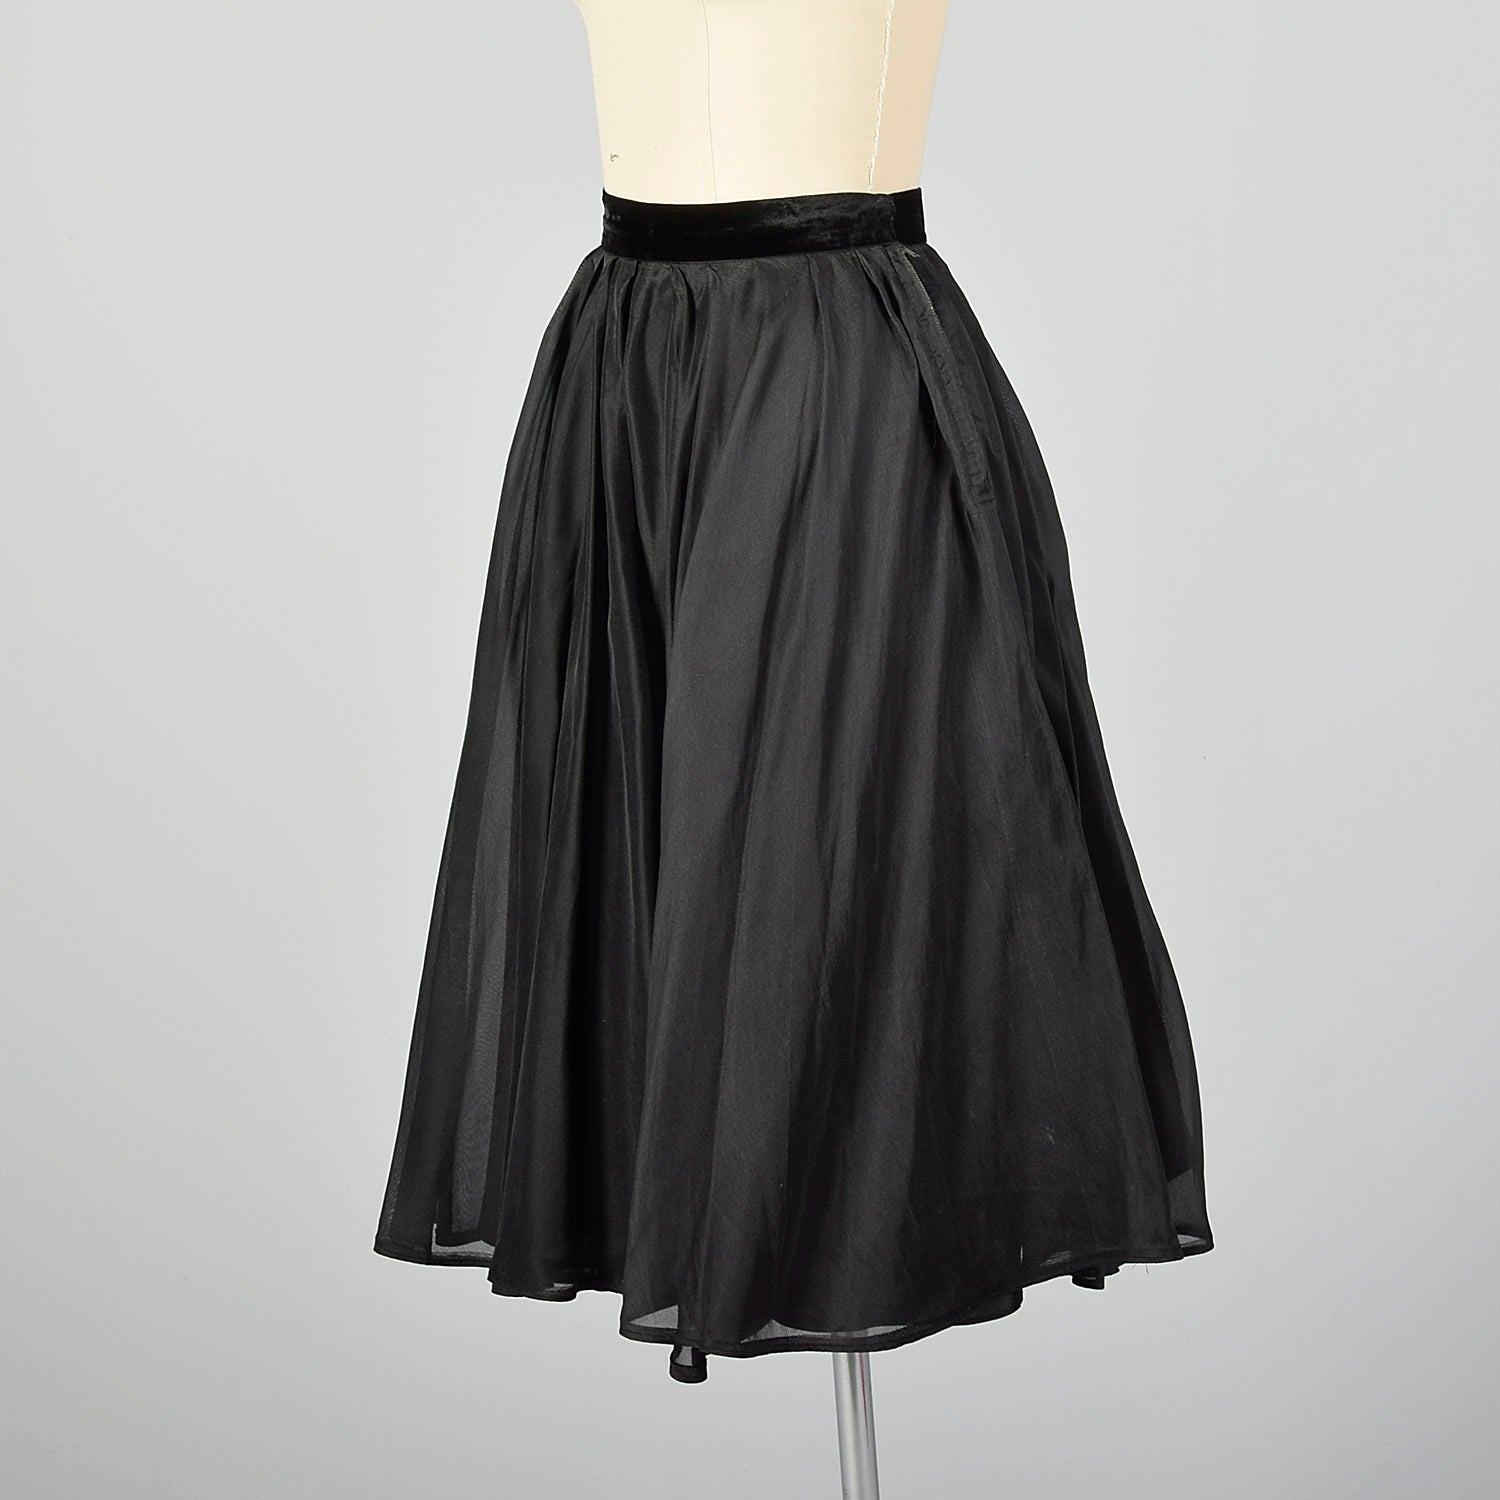 Medium Lord & Taylor 1950s Skirt